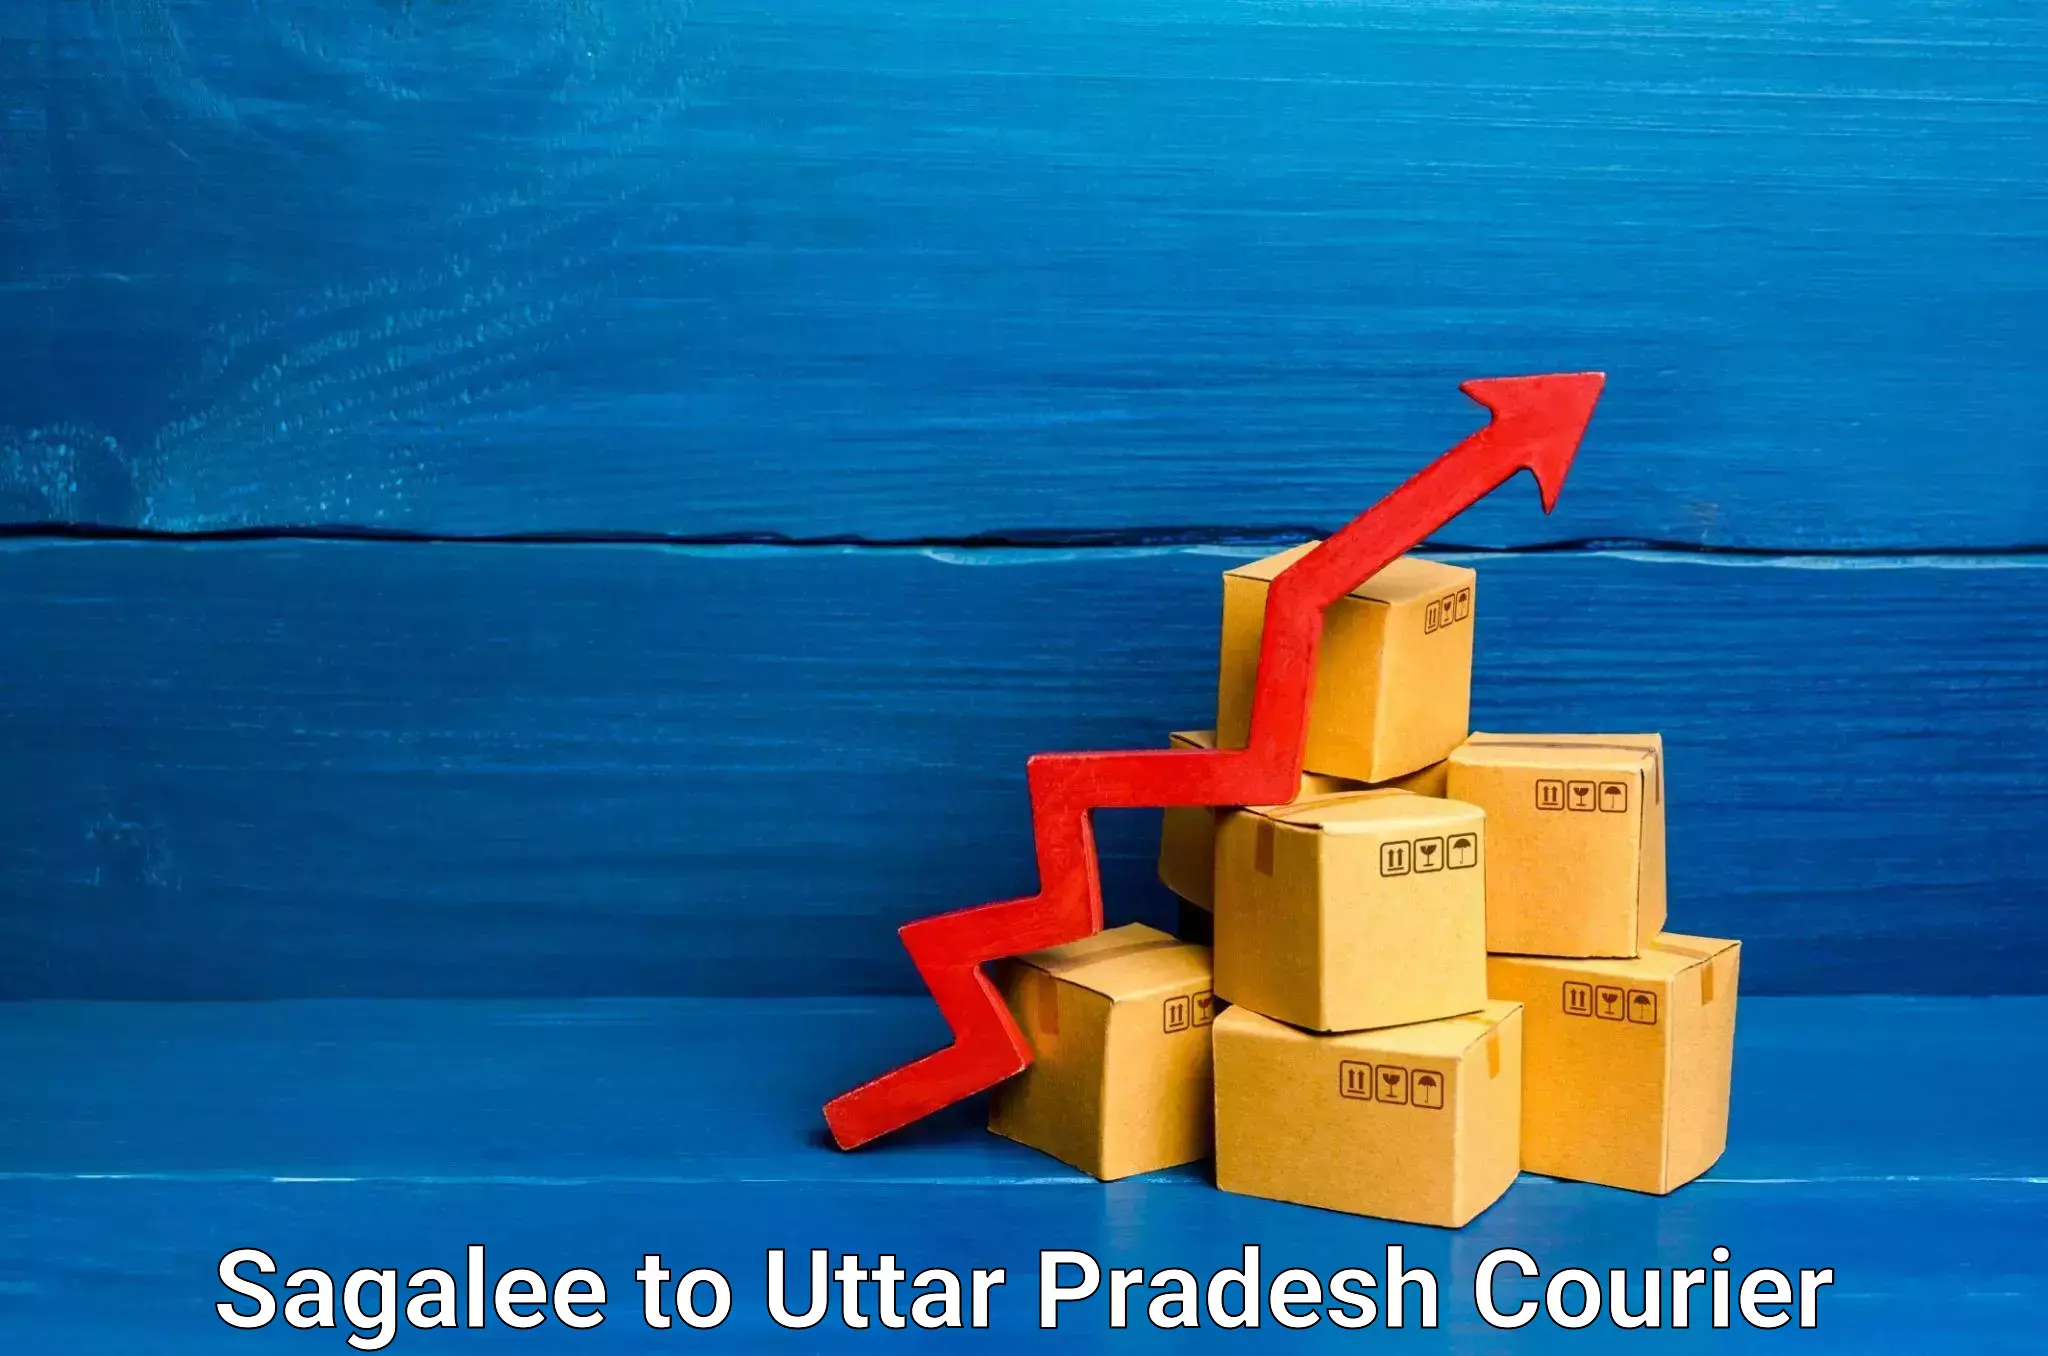 Logistics service provider Sagalee to Uttar Pradesh